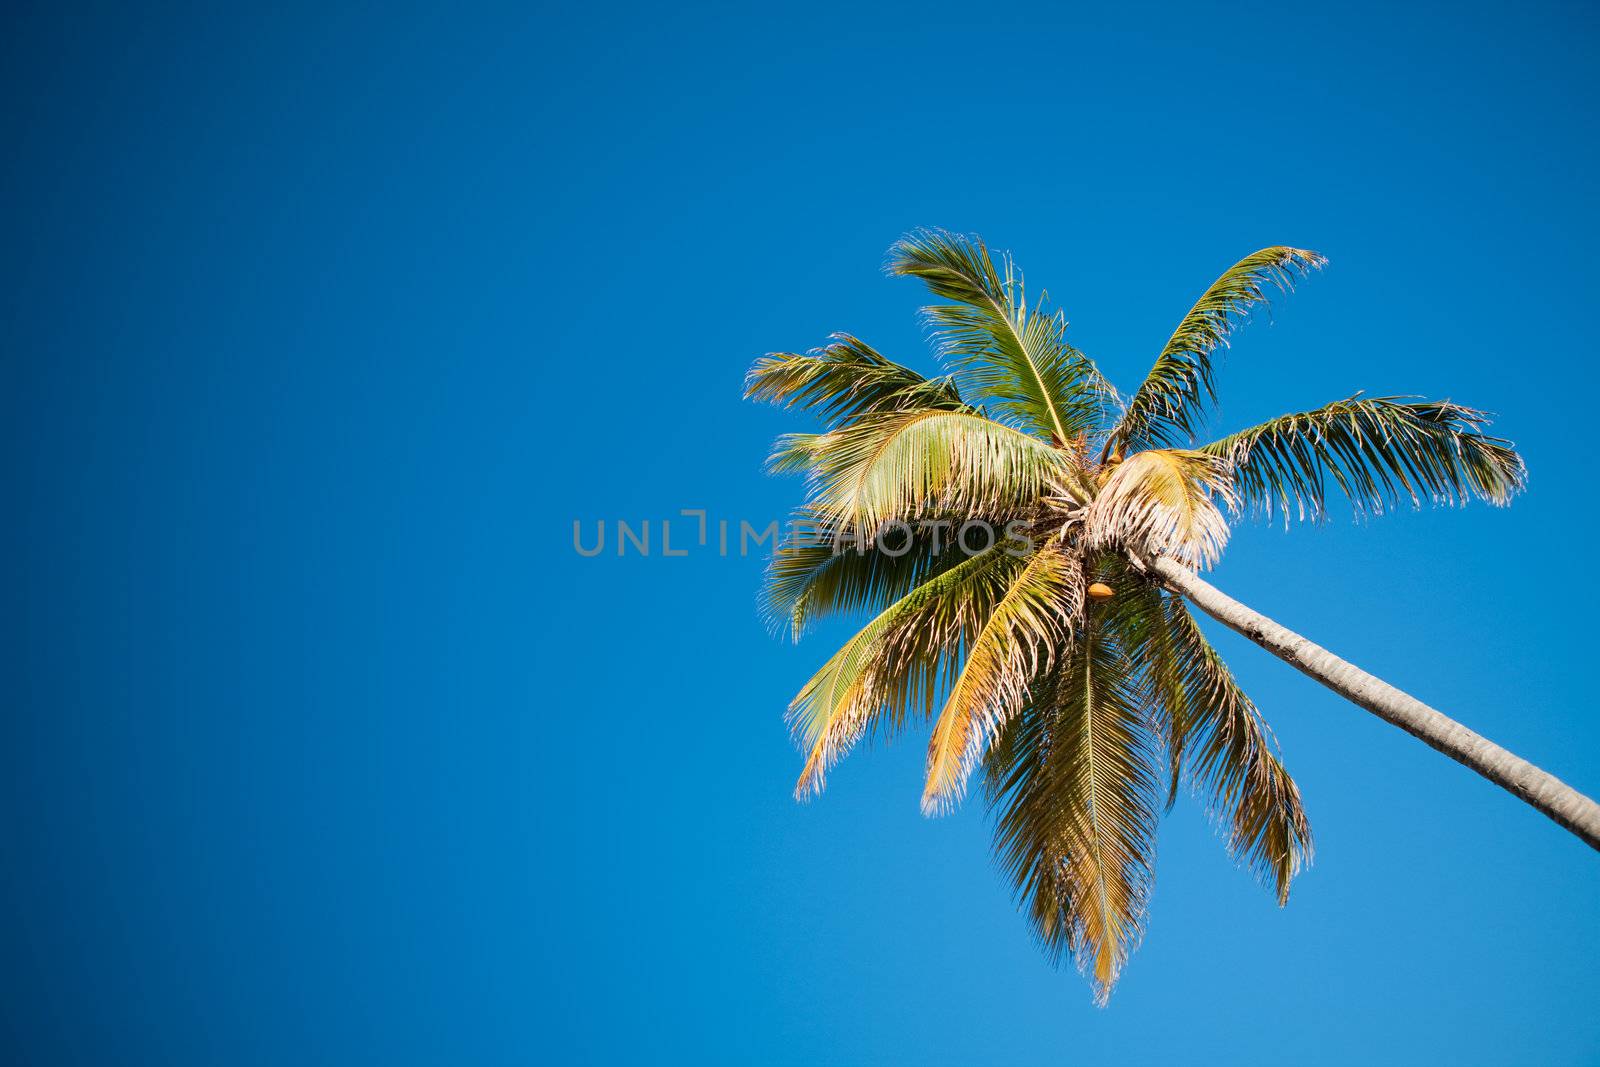 Palms and Caribbean sky by mihhailov